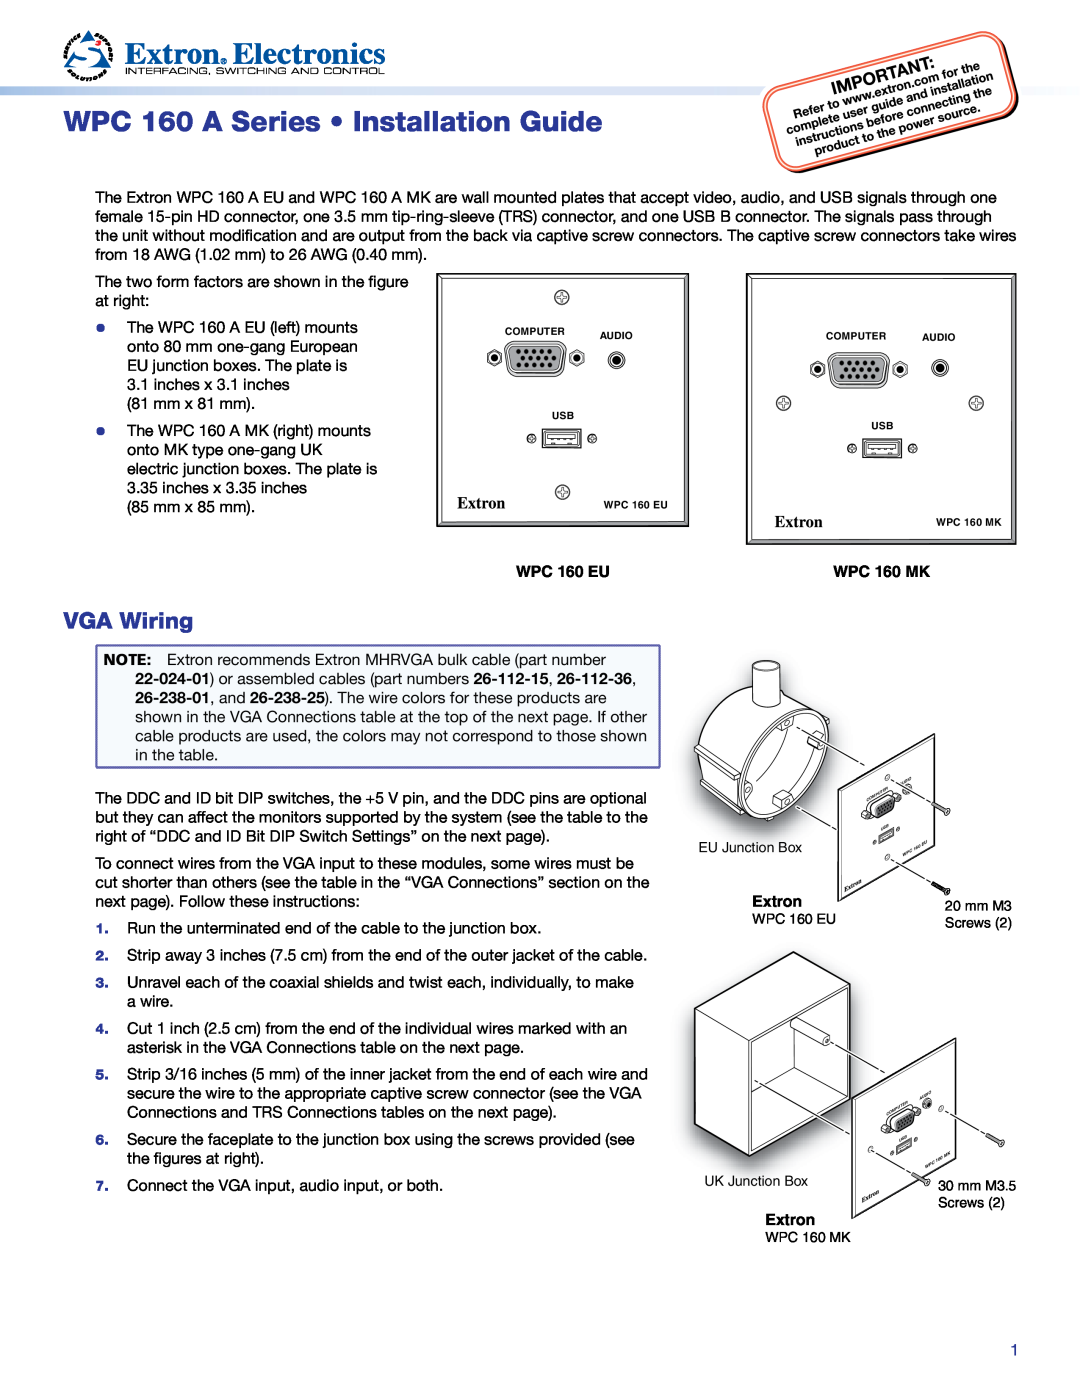 Extron electronic WPC 160 A EU manual WPC 160 A Series Installation Guide, VGA Wiring, WPC 160 EU, WPC 160 MK, Extron 